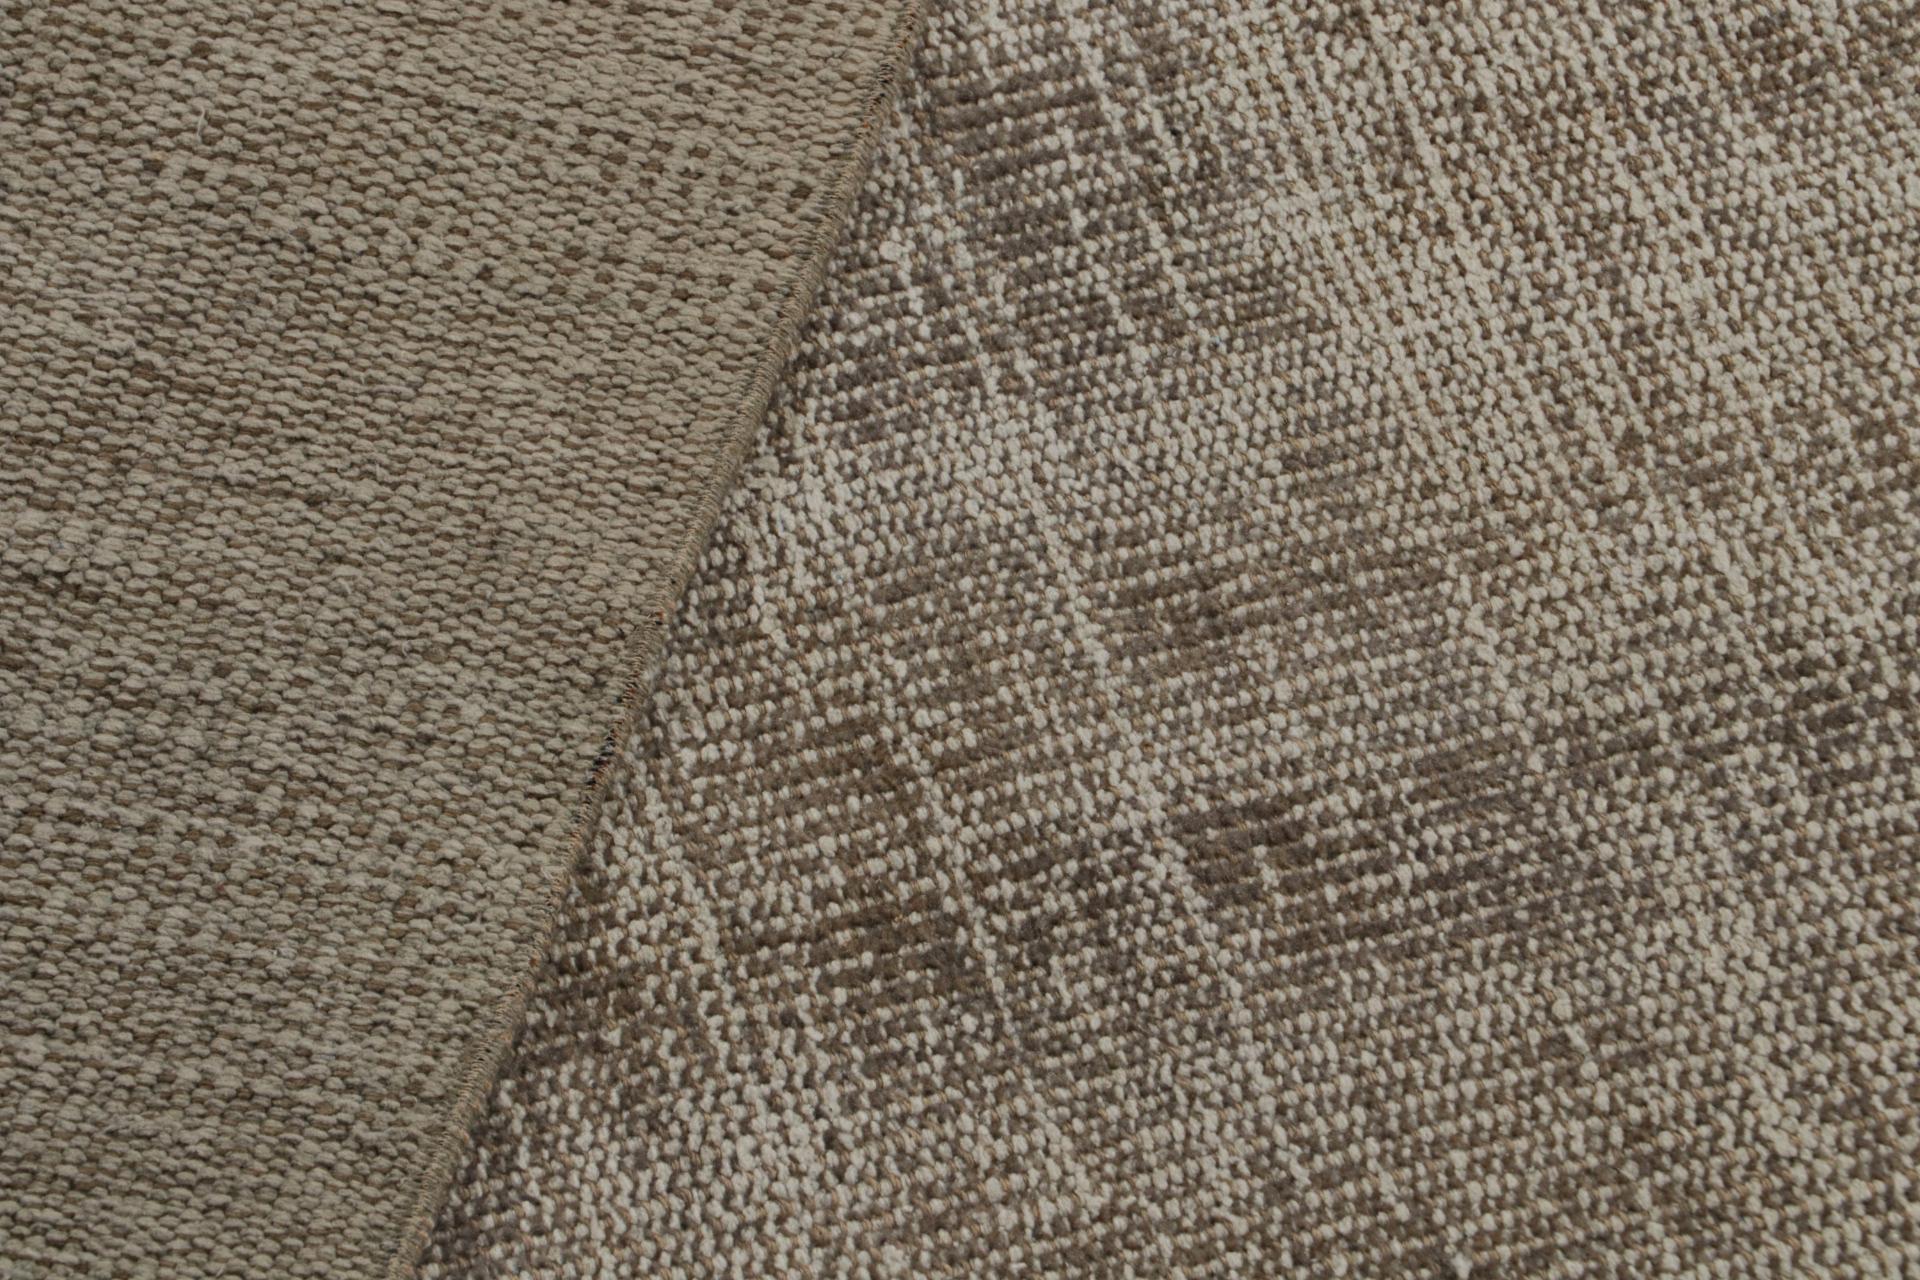 Wool Vintage Zeki Müren Rug, with Textural Geometric patterns, from Rug & Kilim For Sale